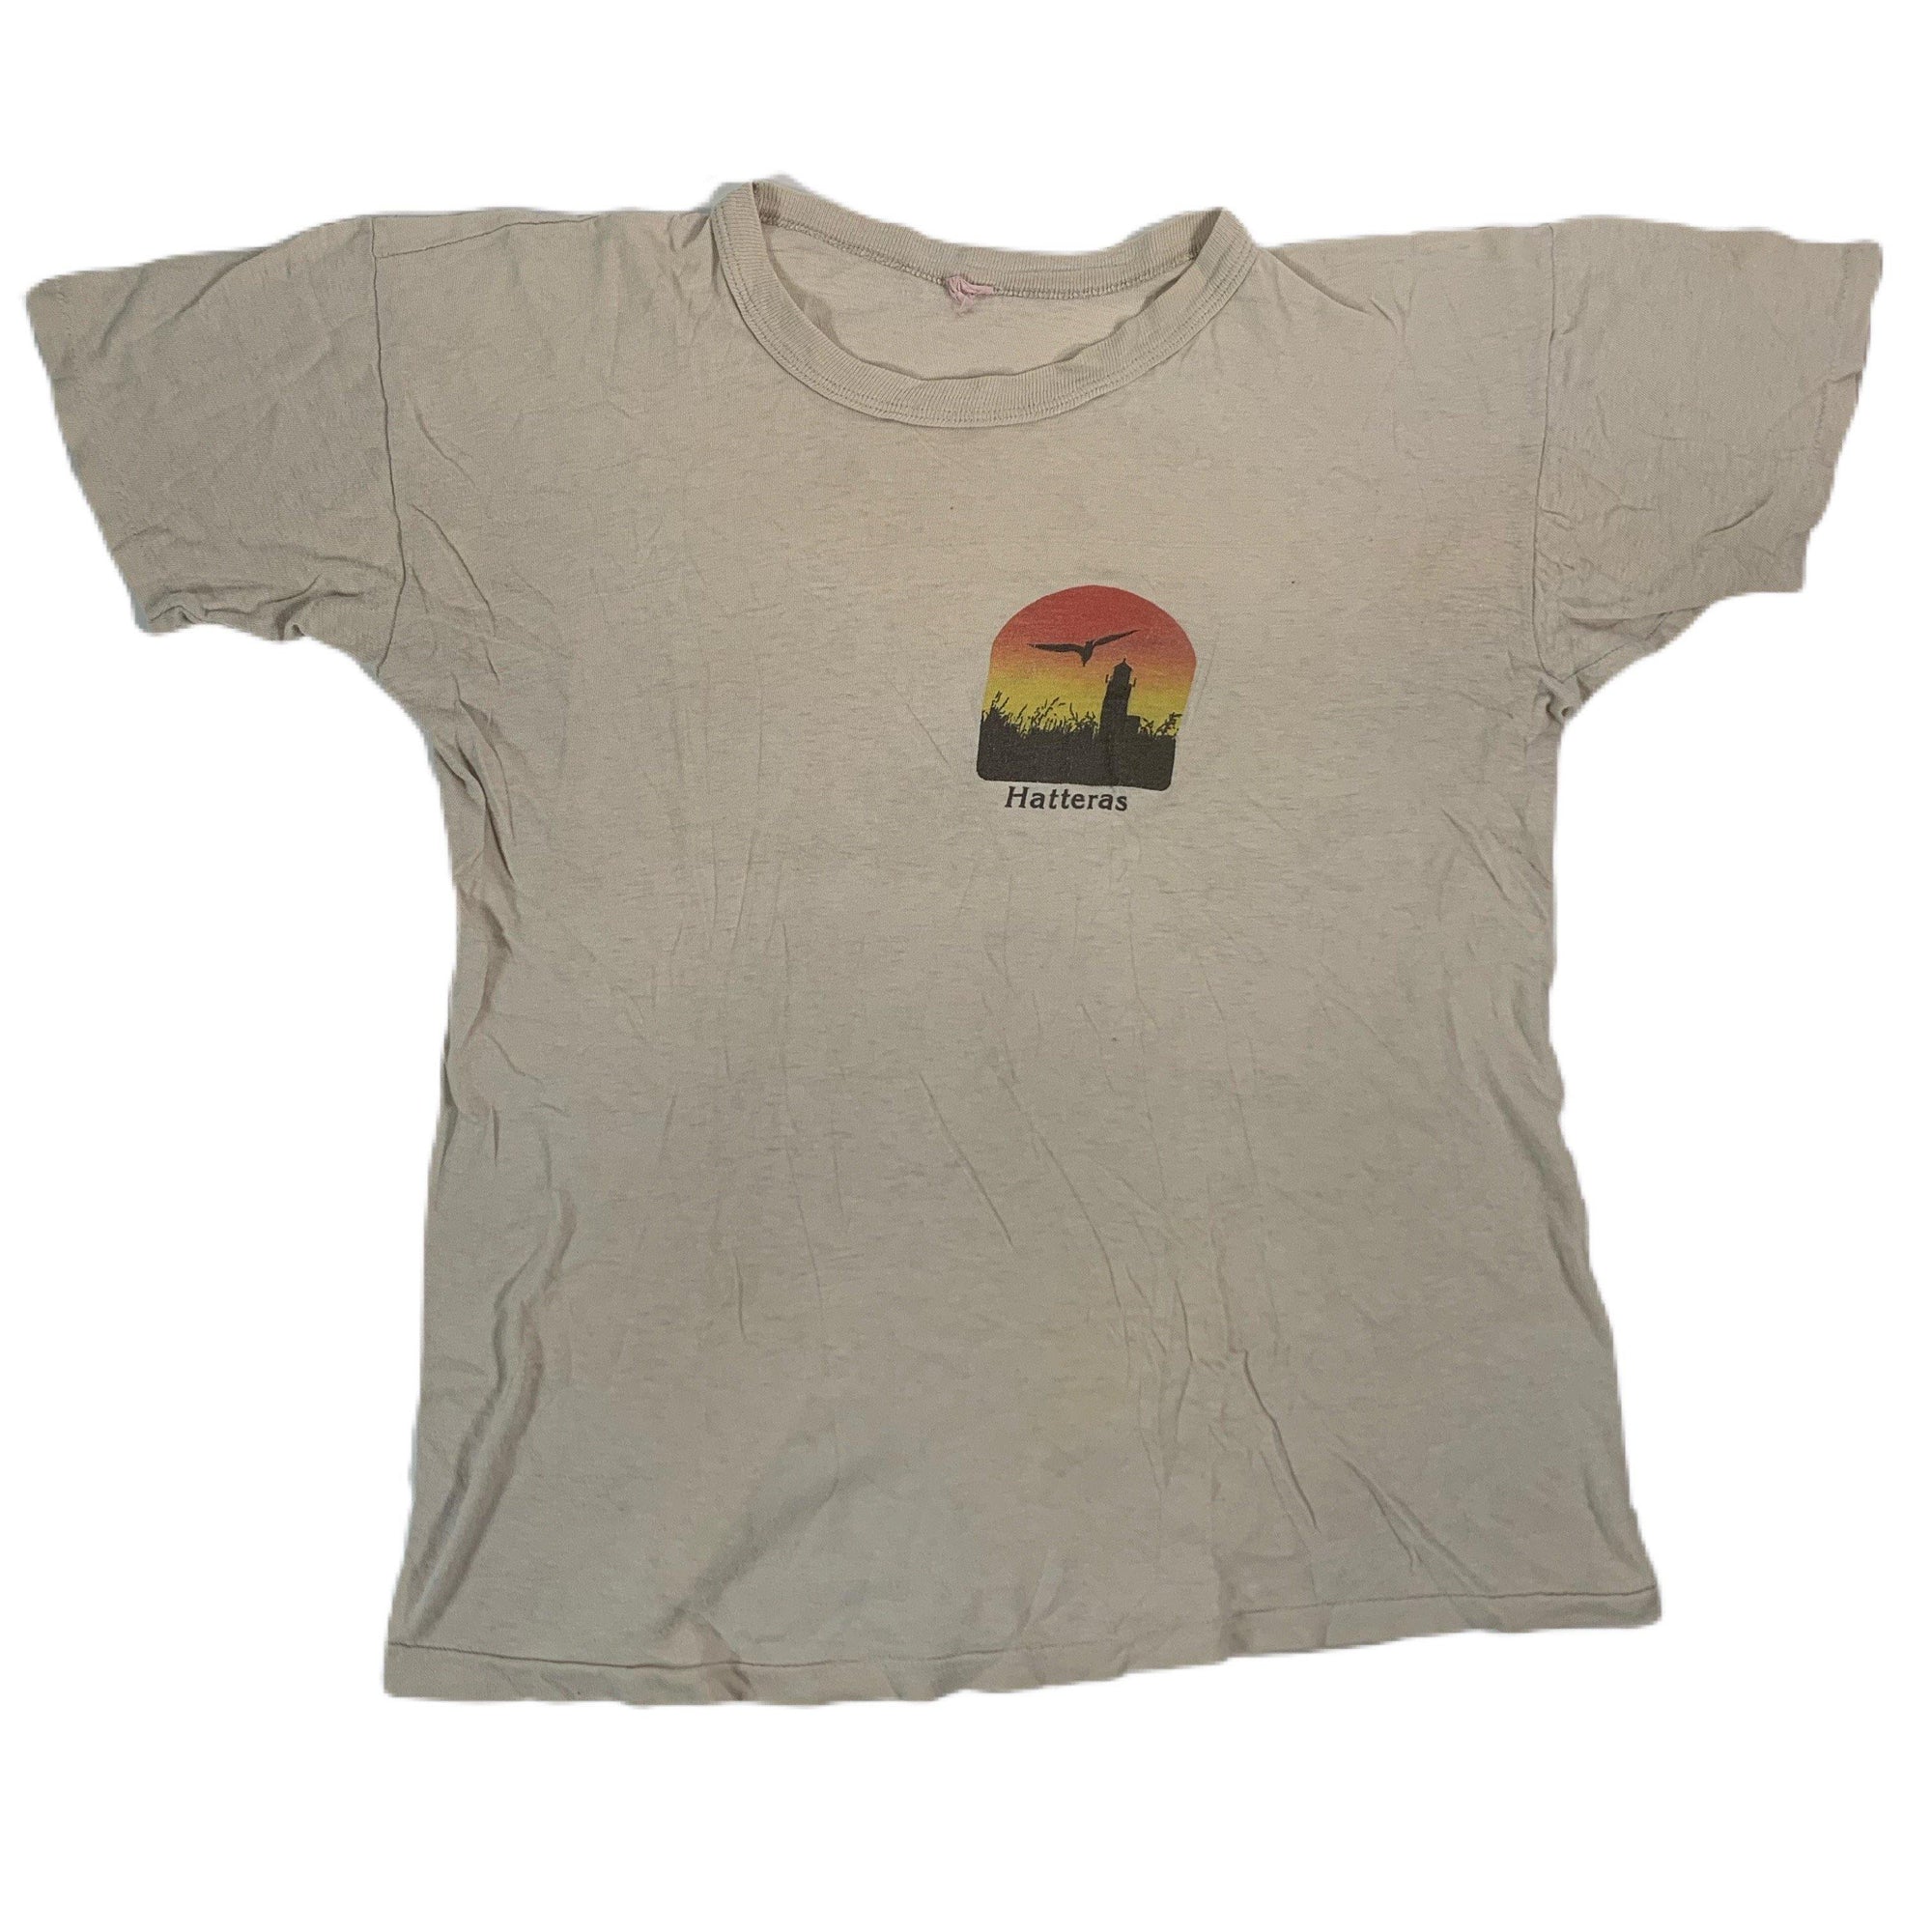 Vintage Hatteras "Outer Banks" T-Shirt - jointcustodydc